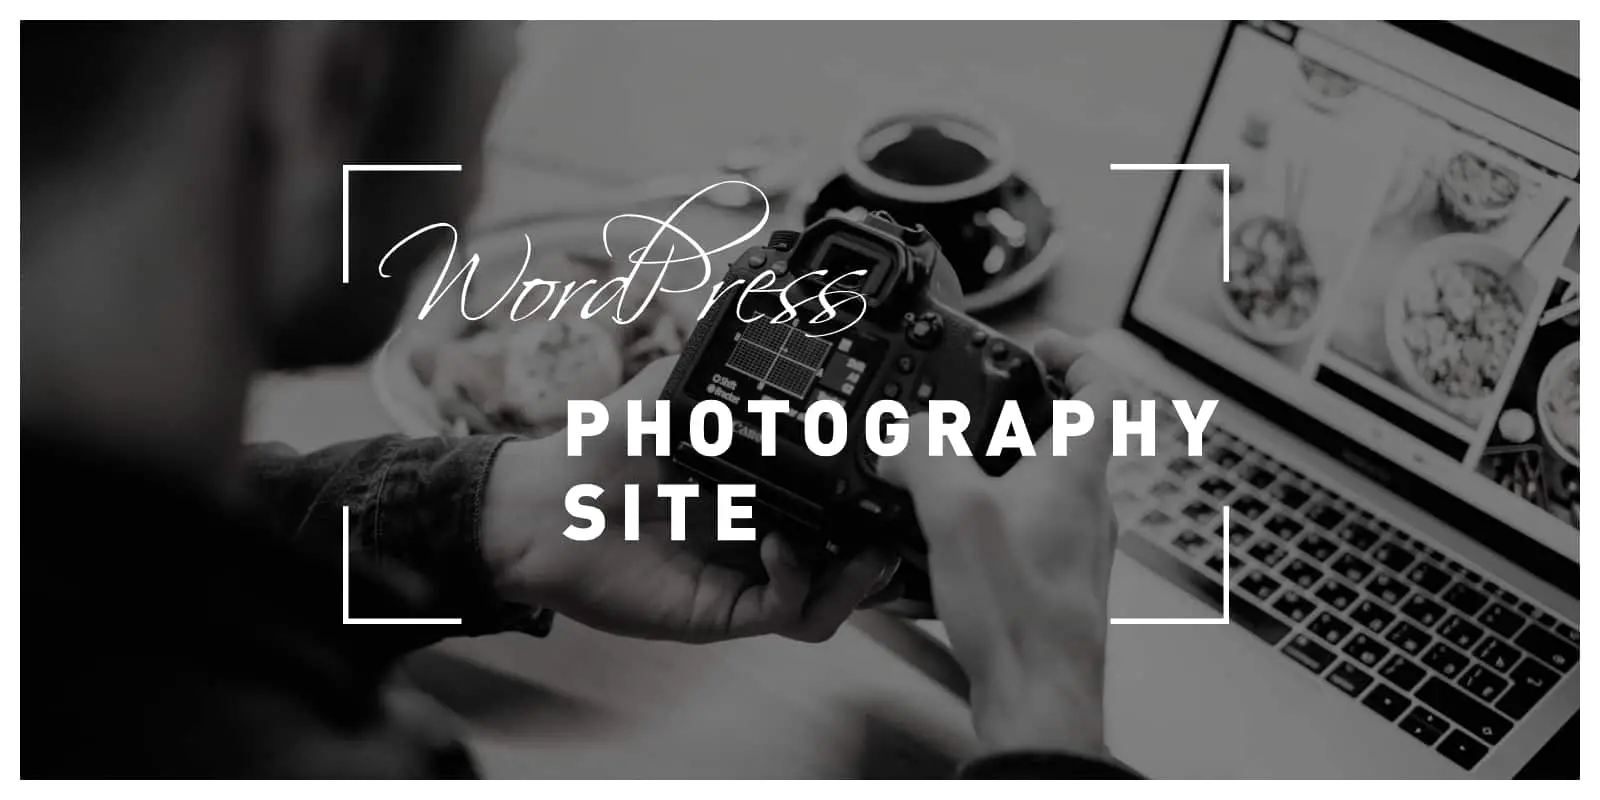 WordPress Photography Site